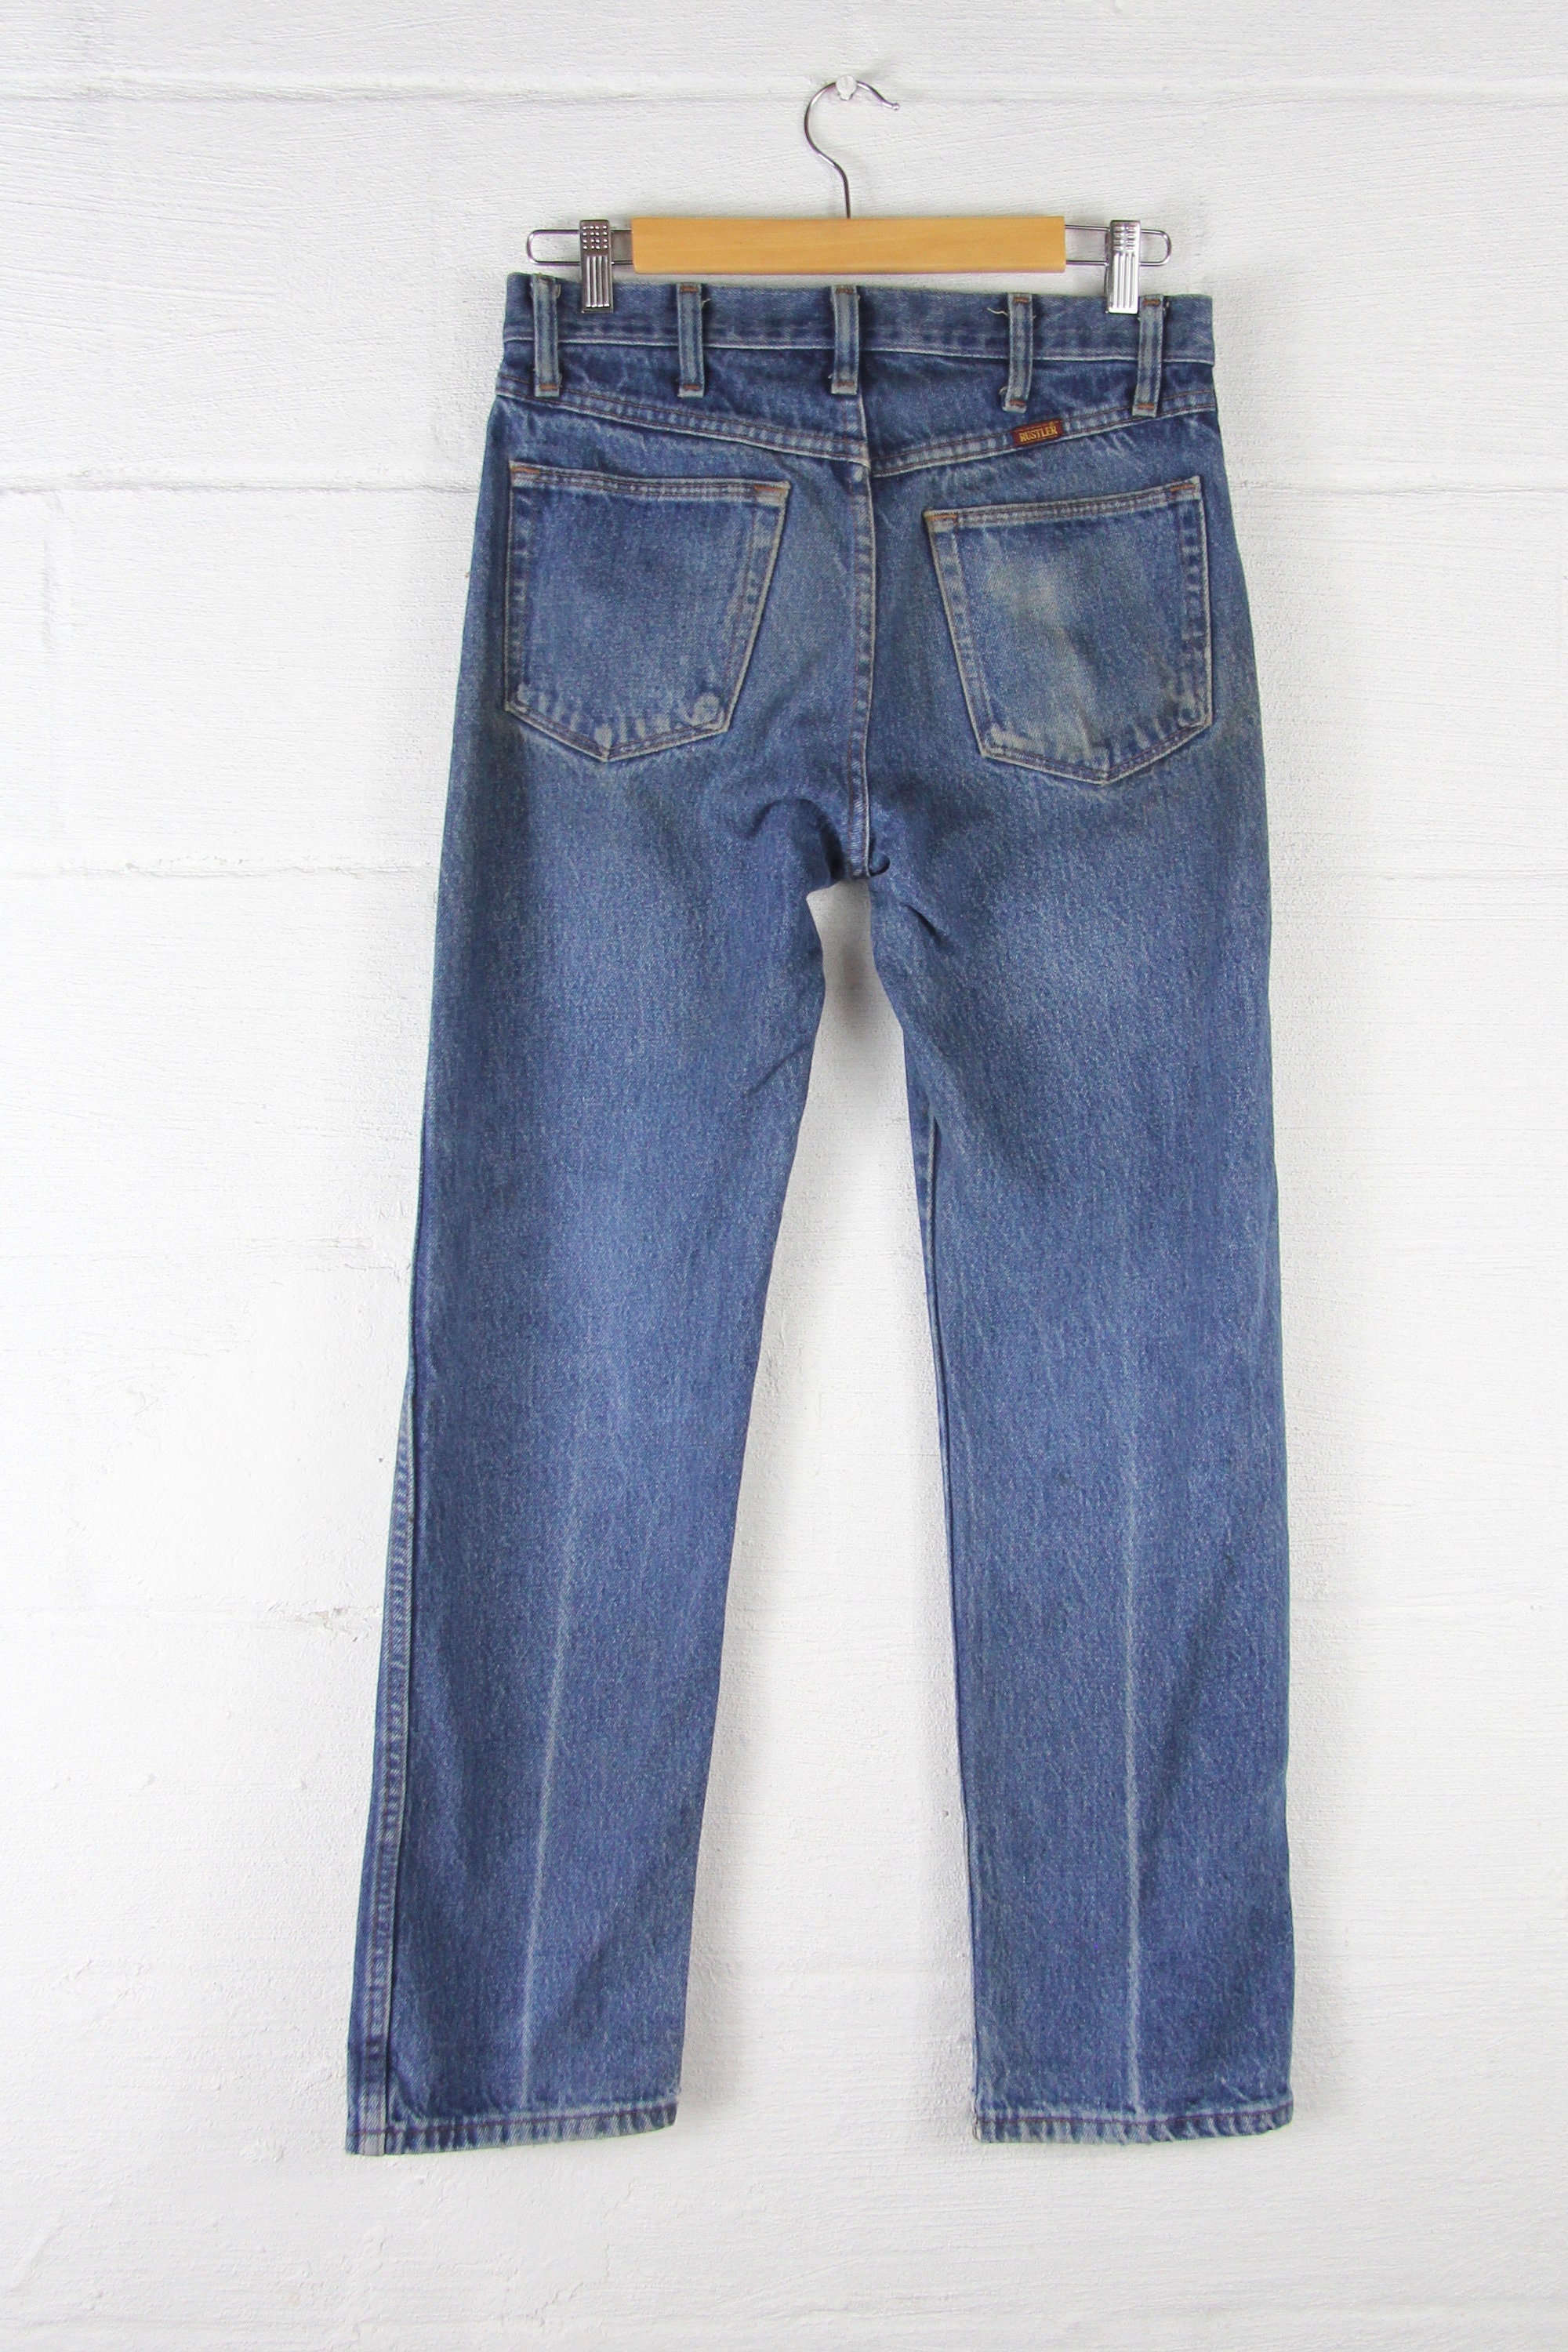 Men's Vintage Rustler Jeans with Darning 29 x 30